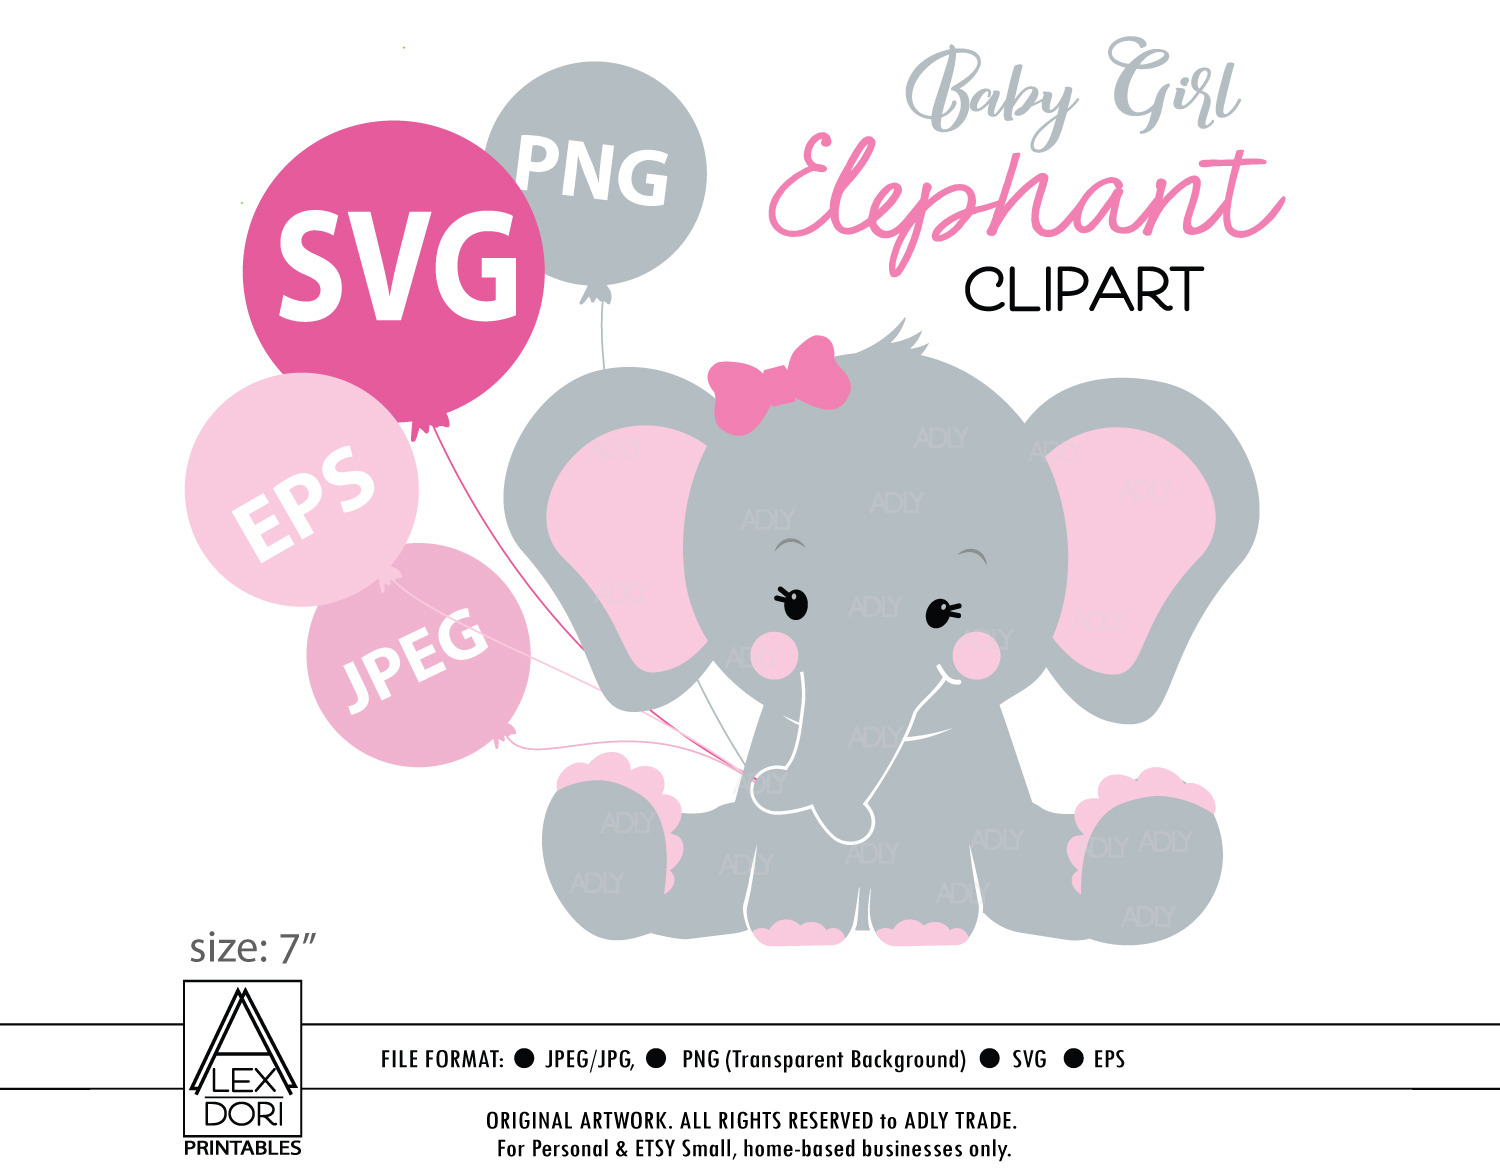 Cute Elephant SVG clipart ~ Illustrations ~ Creative Market